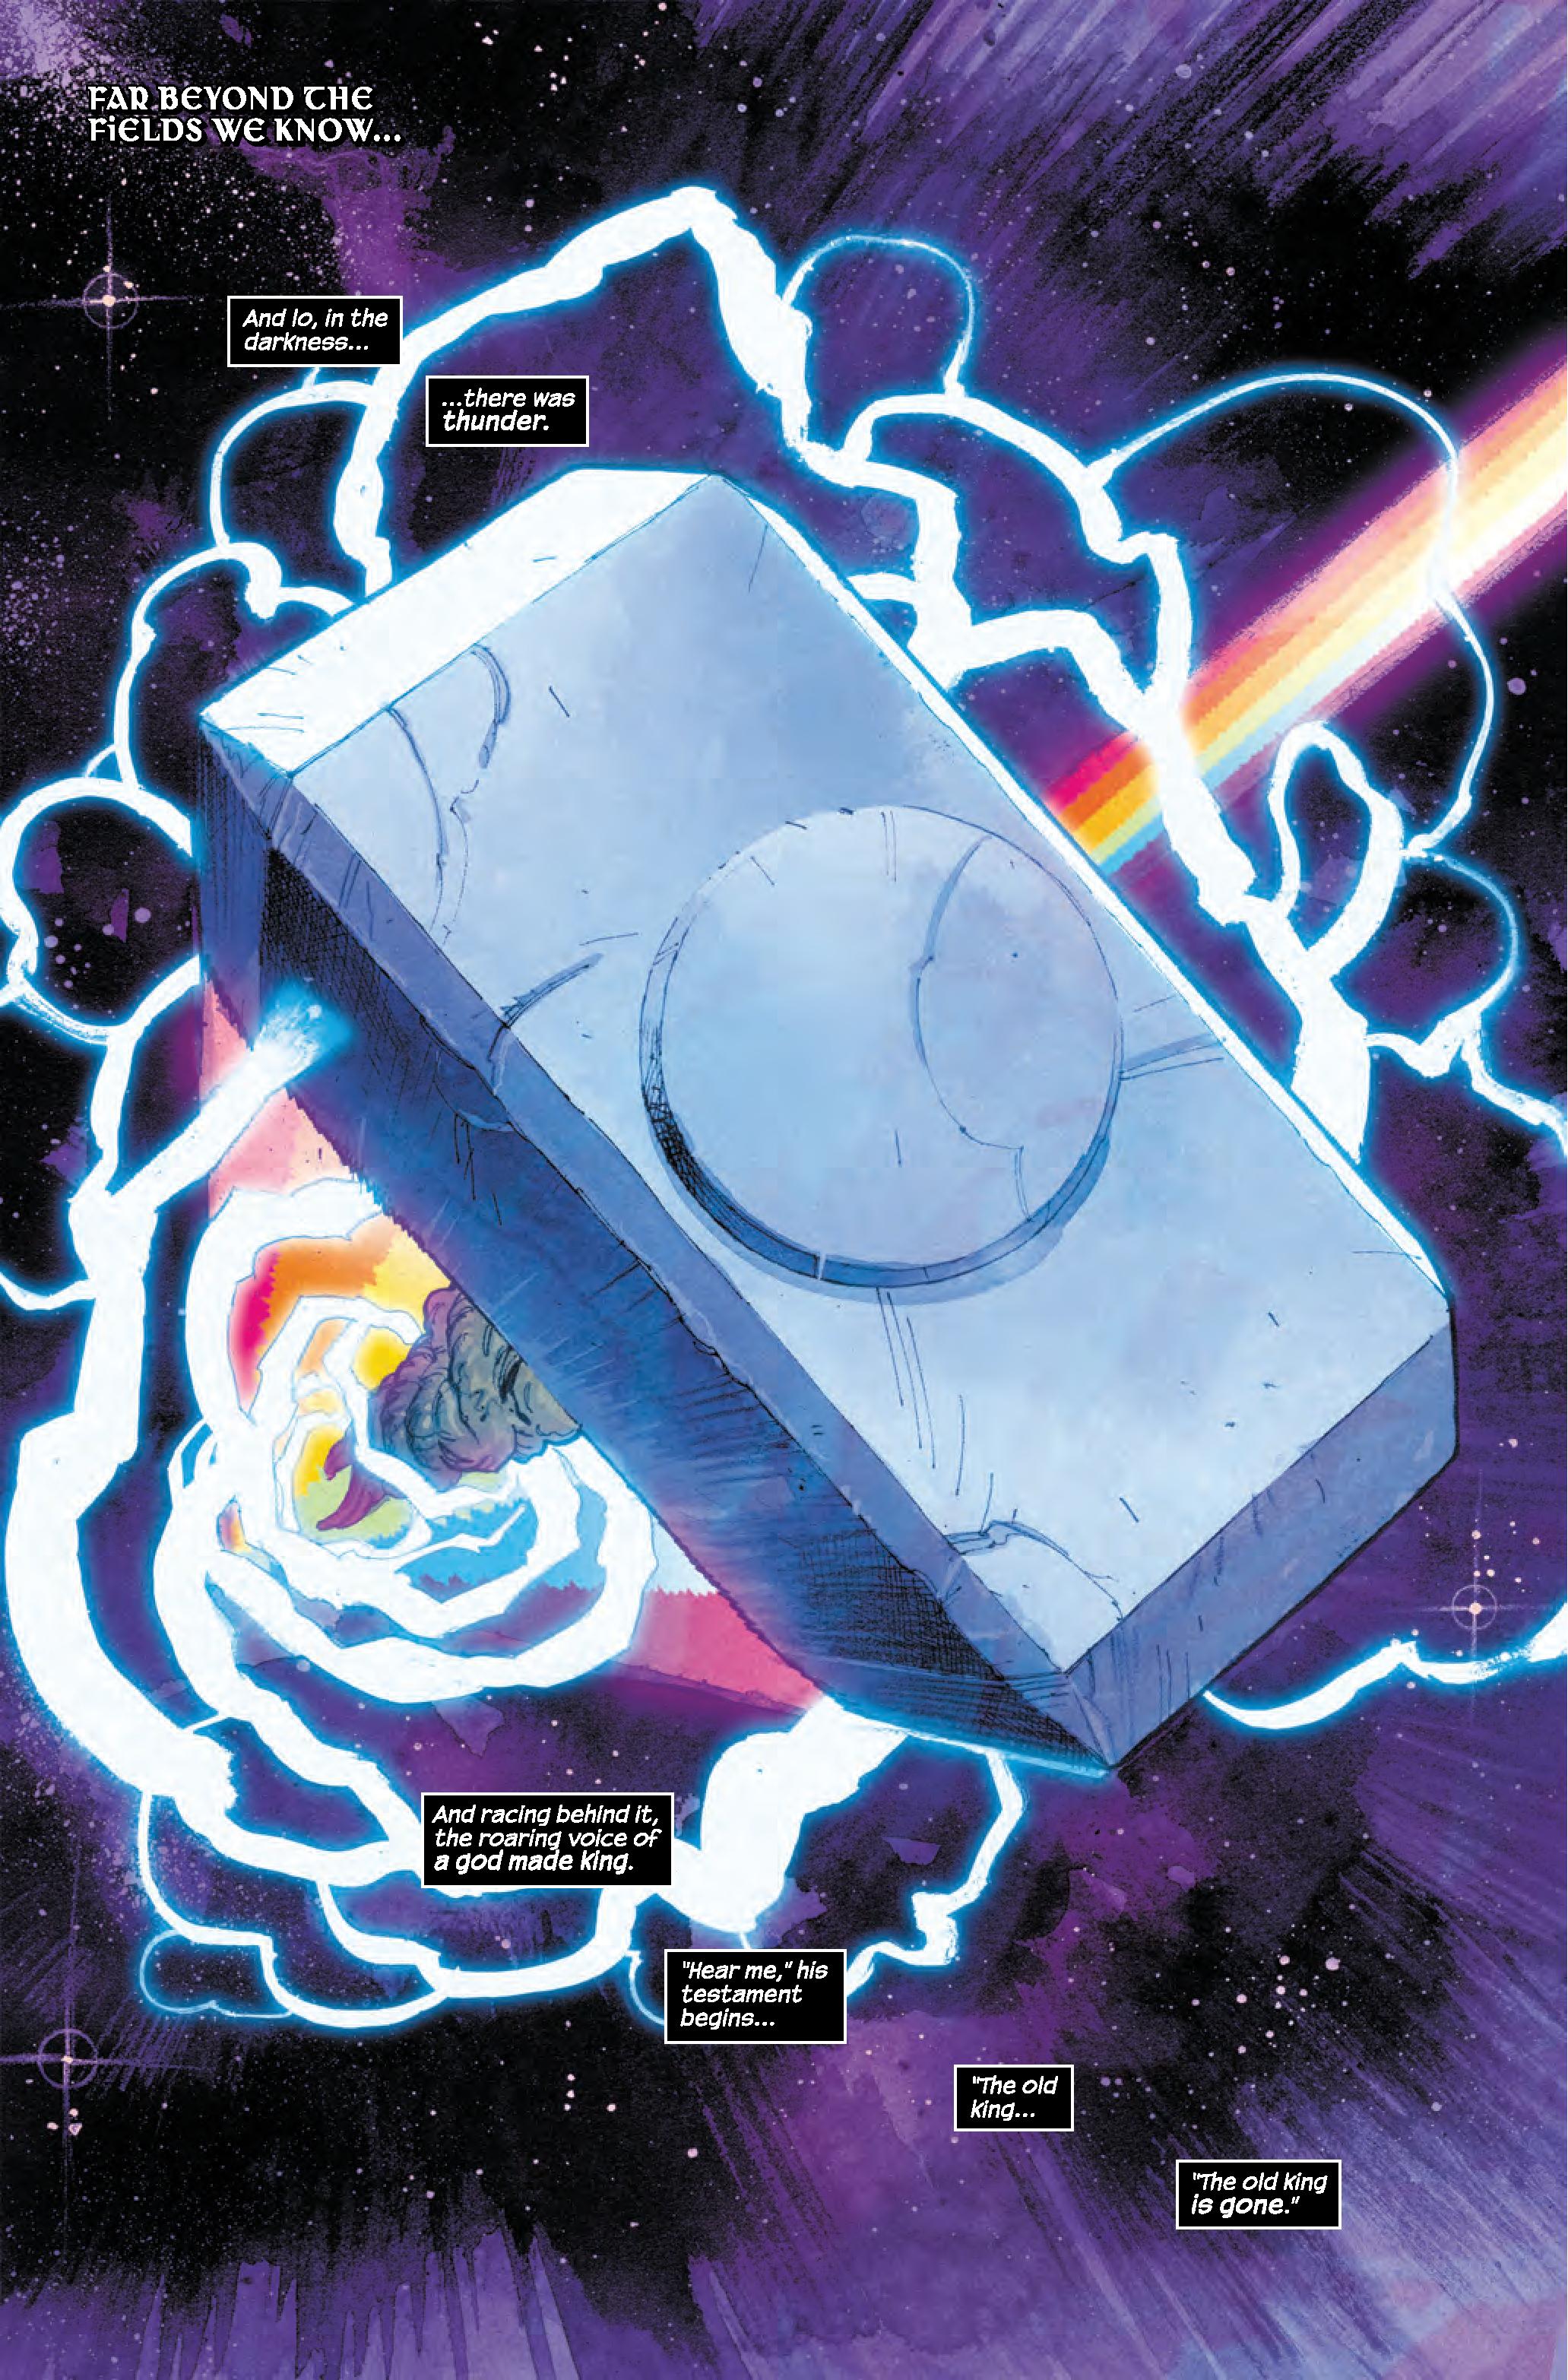 Thor #1 (2020)